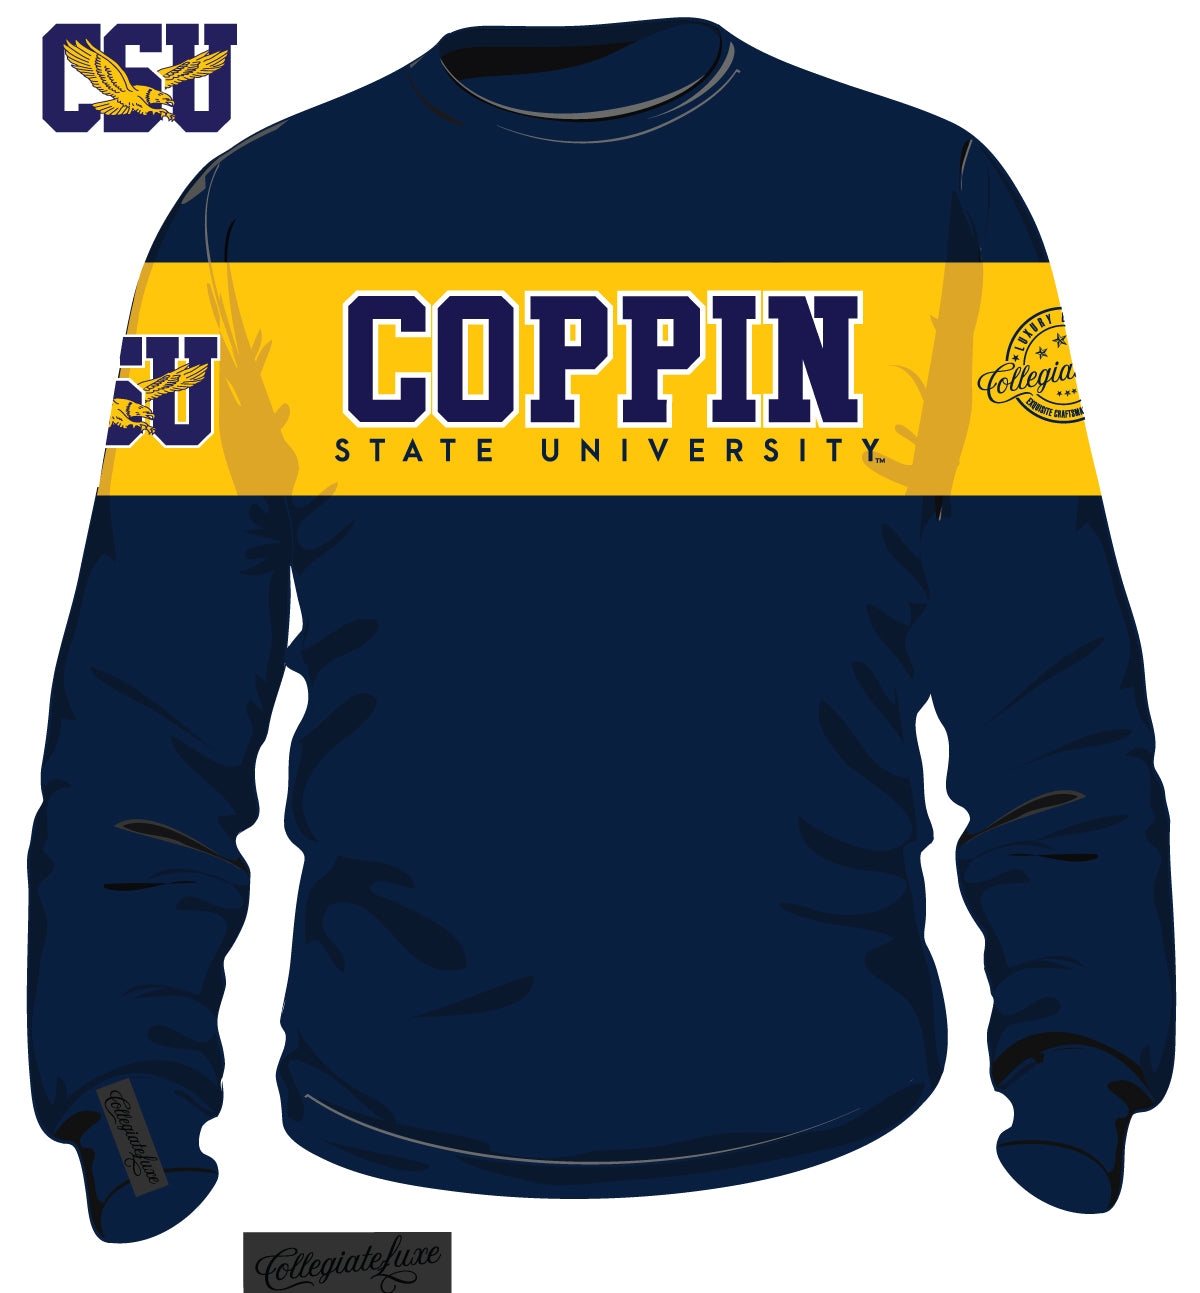 Coppin St. | 2 TONE (Chenille & Embroidery) Unisex Sweatshirt